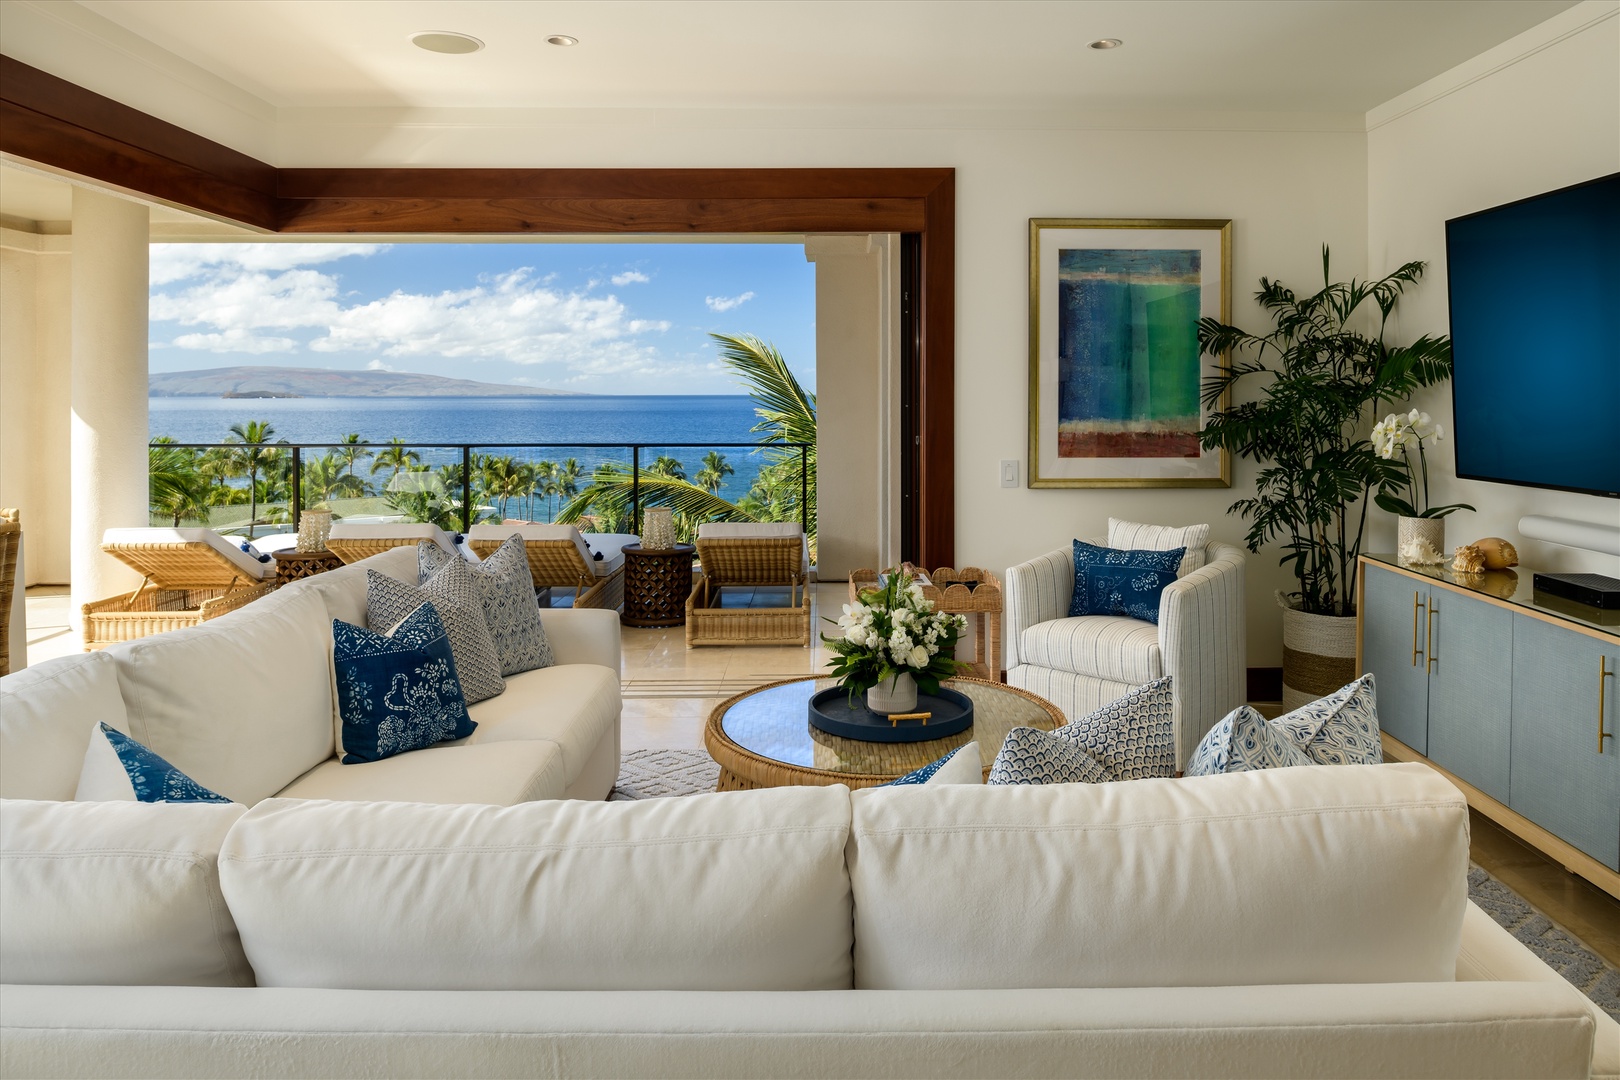 Wailea Vacation Rentals, Blue Ocean Suite H401 at Wailea Beach Villas* - Expansive Ocean View Great Room